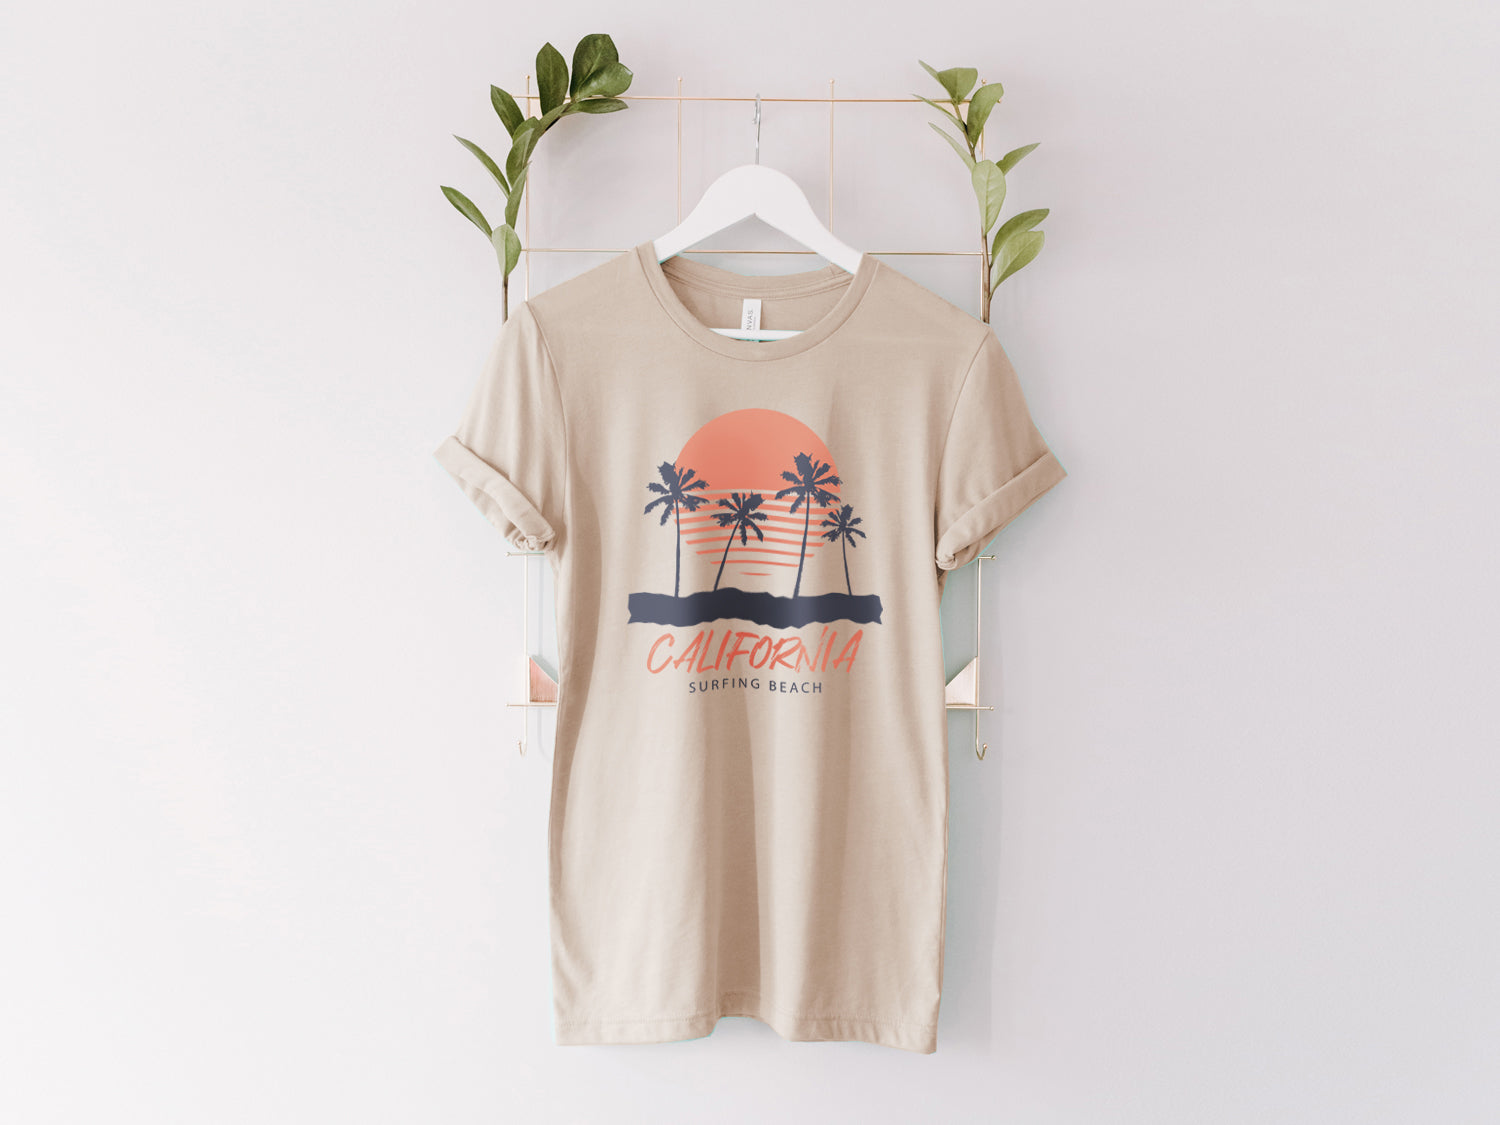 California Palm Tree Sunset Beach Surfing T-shirt - Beach Vibes California State Retro Vintage Design Printed Tee Shirt